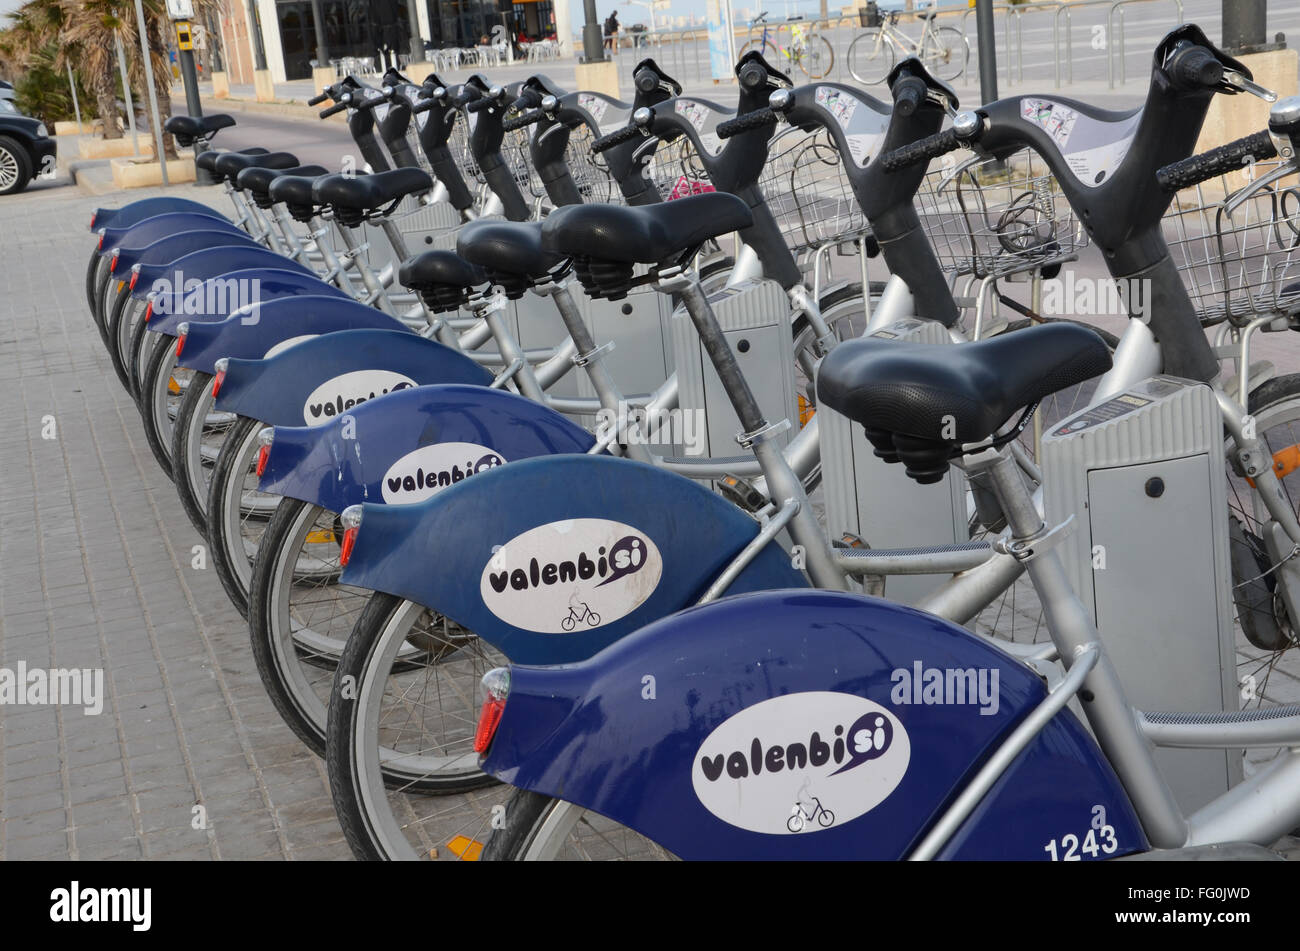 Valenbisi, the bike rental scheme in Valencia Spain Stock Photo